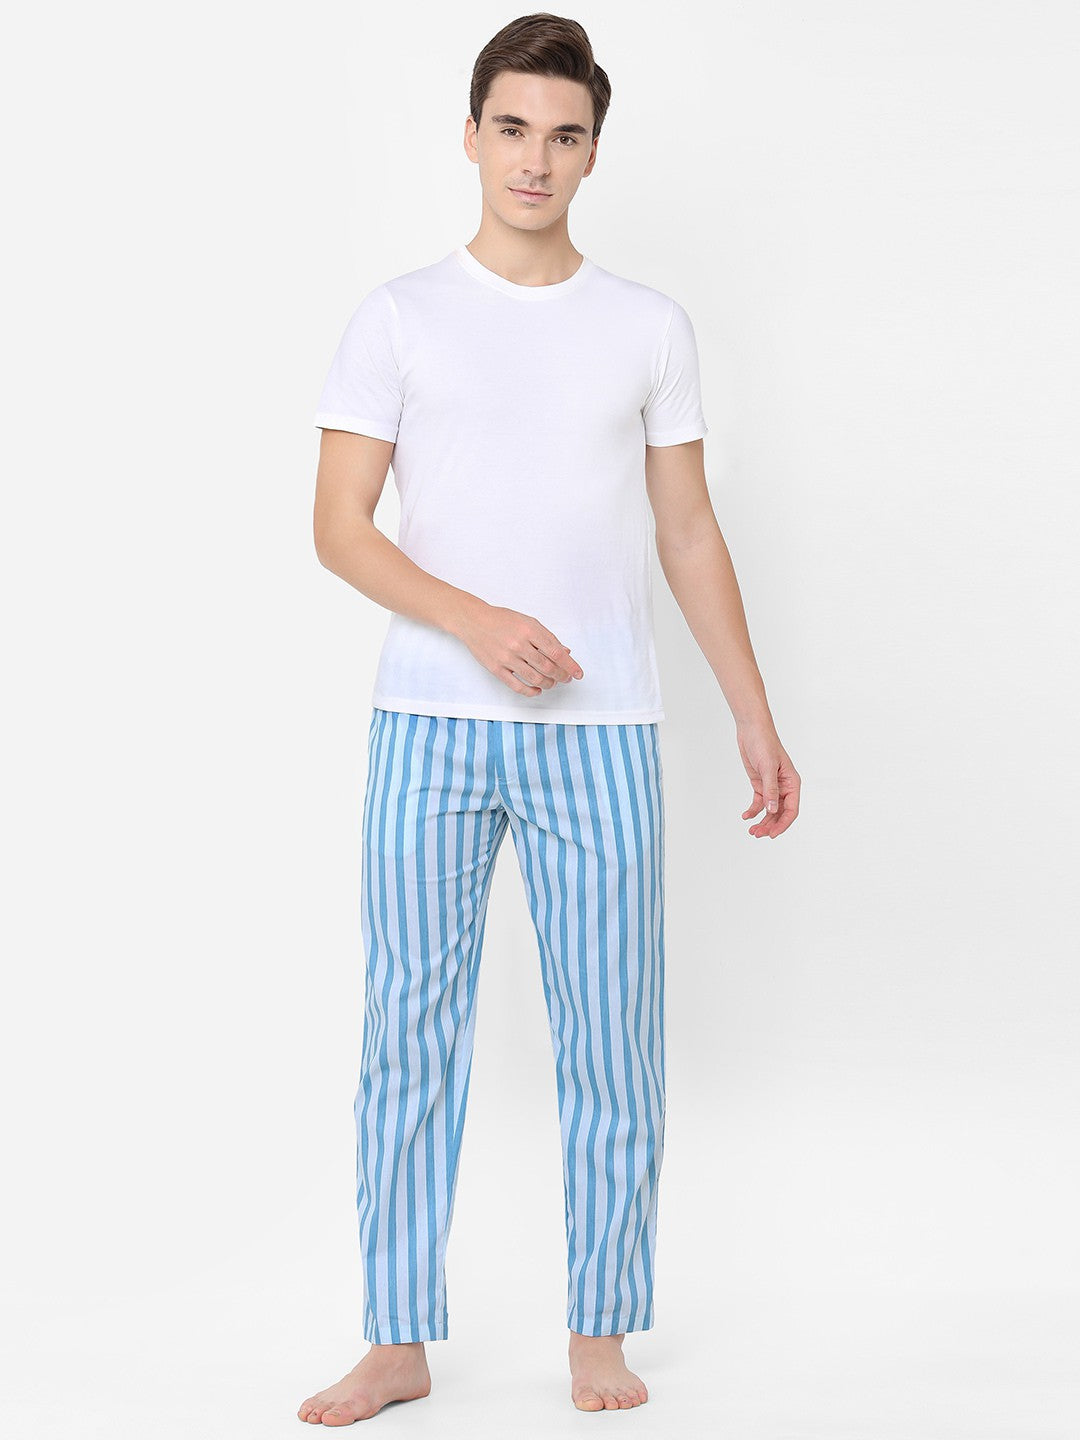 Buy URBAN SCOTTISH Urban Scottish Men Striped Casual Blue Pyjama online at  best prices  shop in Indiaf2fmartcom